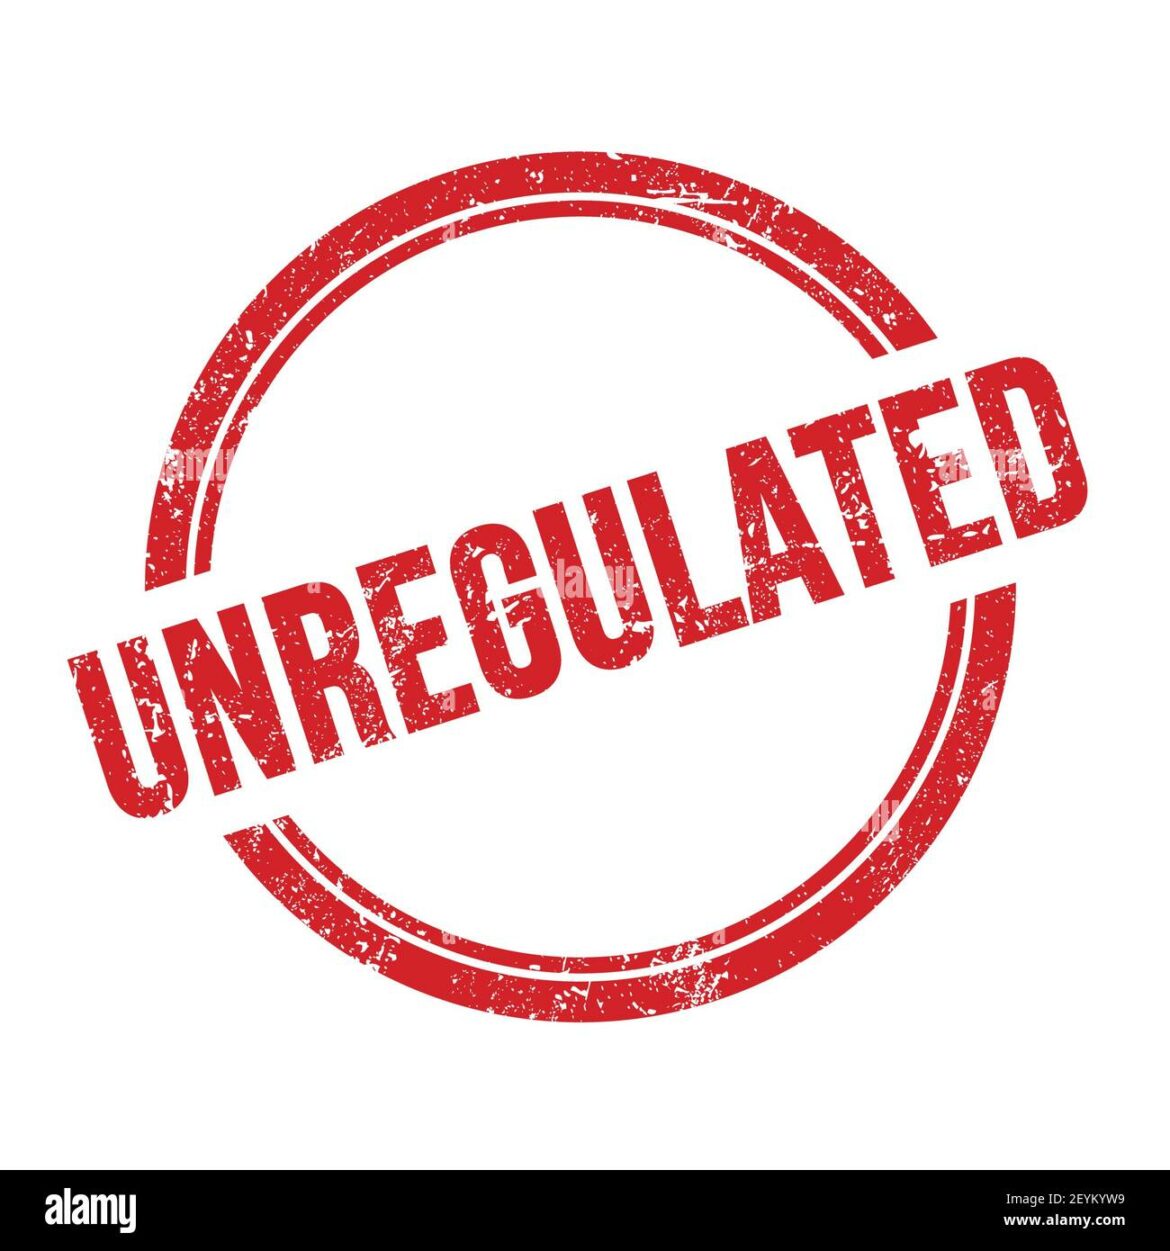 Unregulated